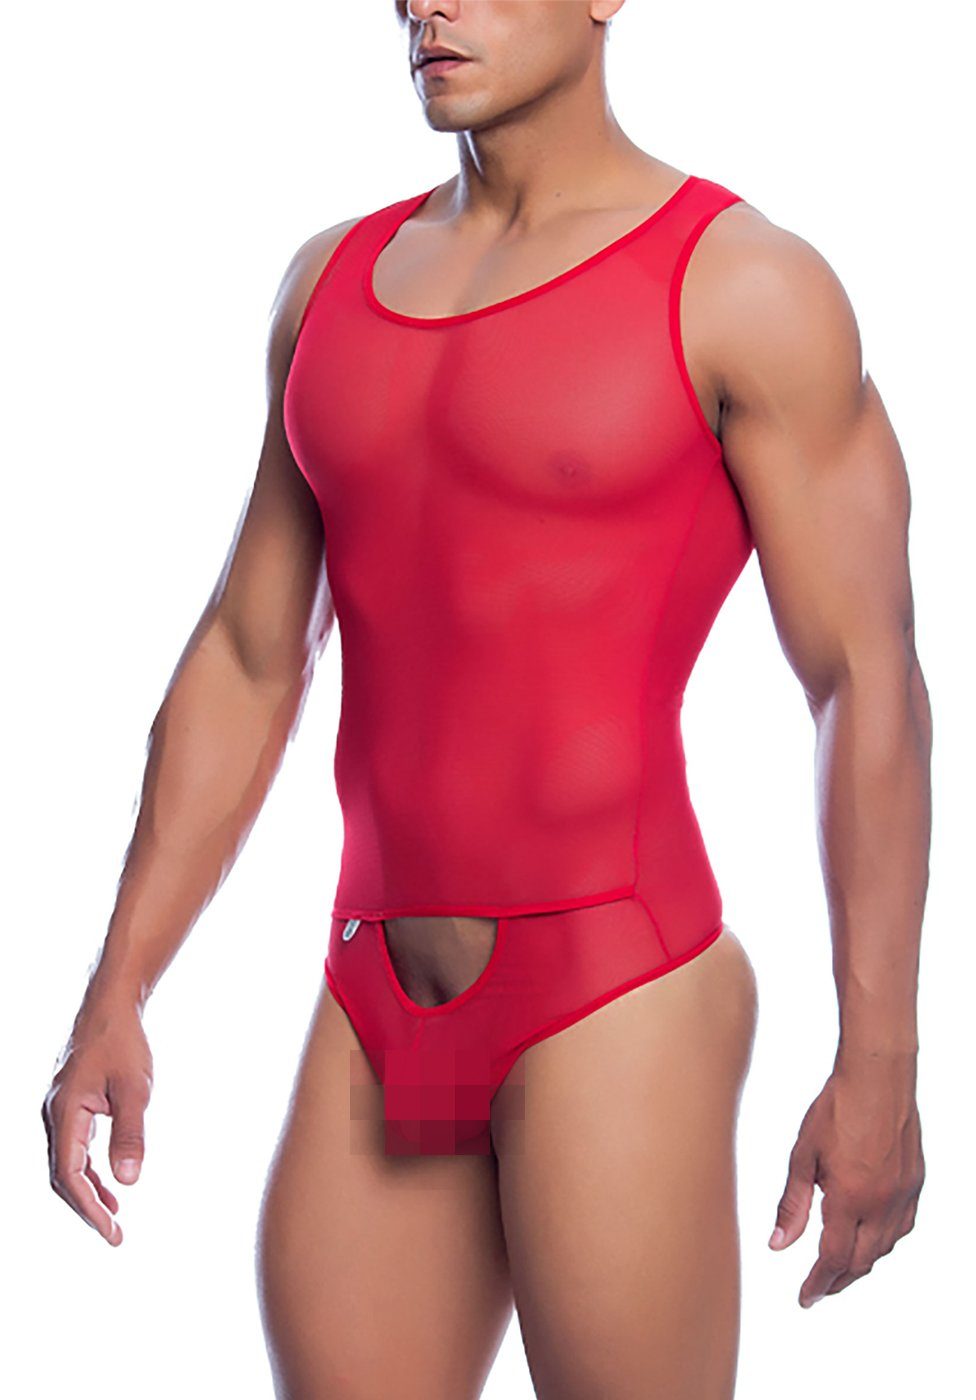 MOB Eroticwear Body Transparenter String-Body - rot